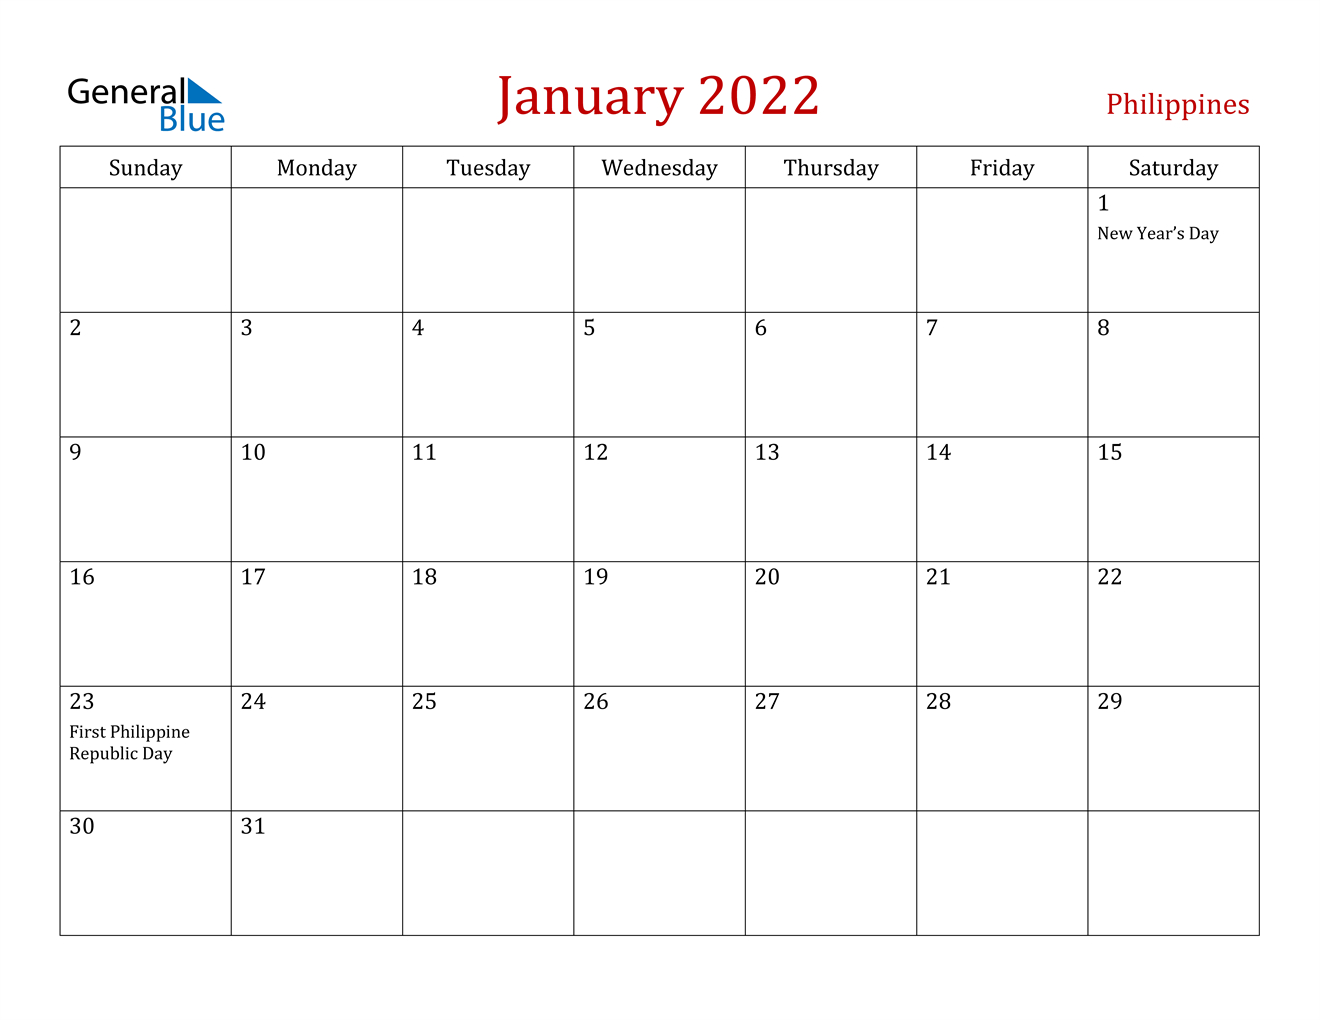 January 2022 Calendar - Philippines